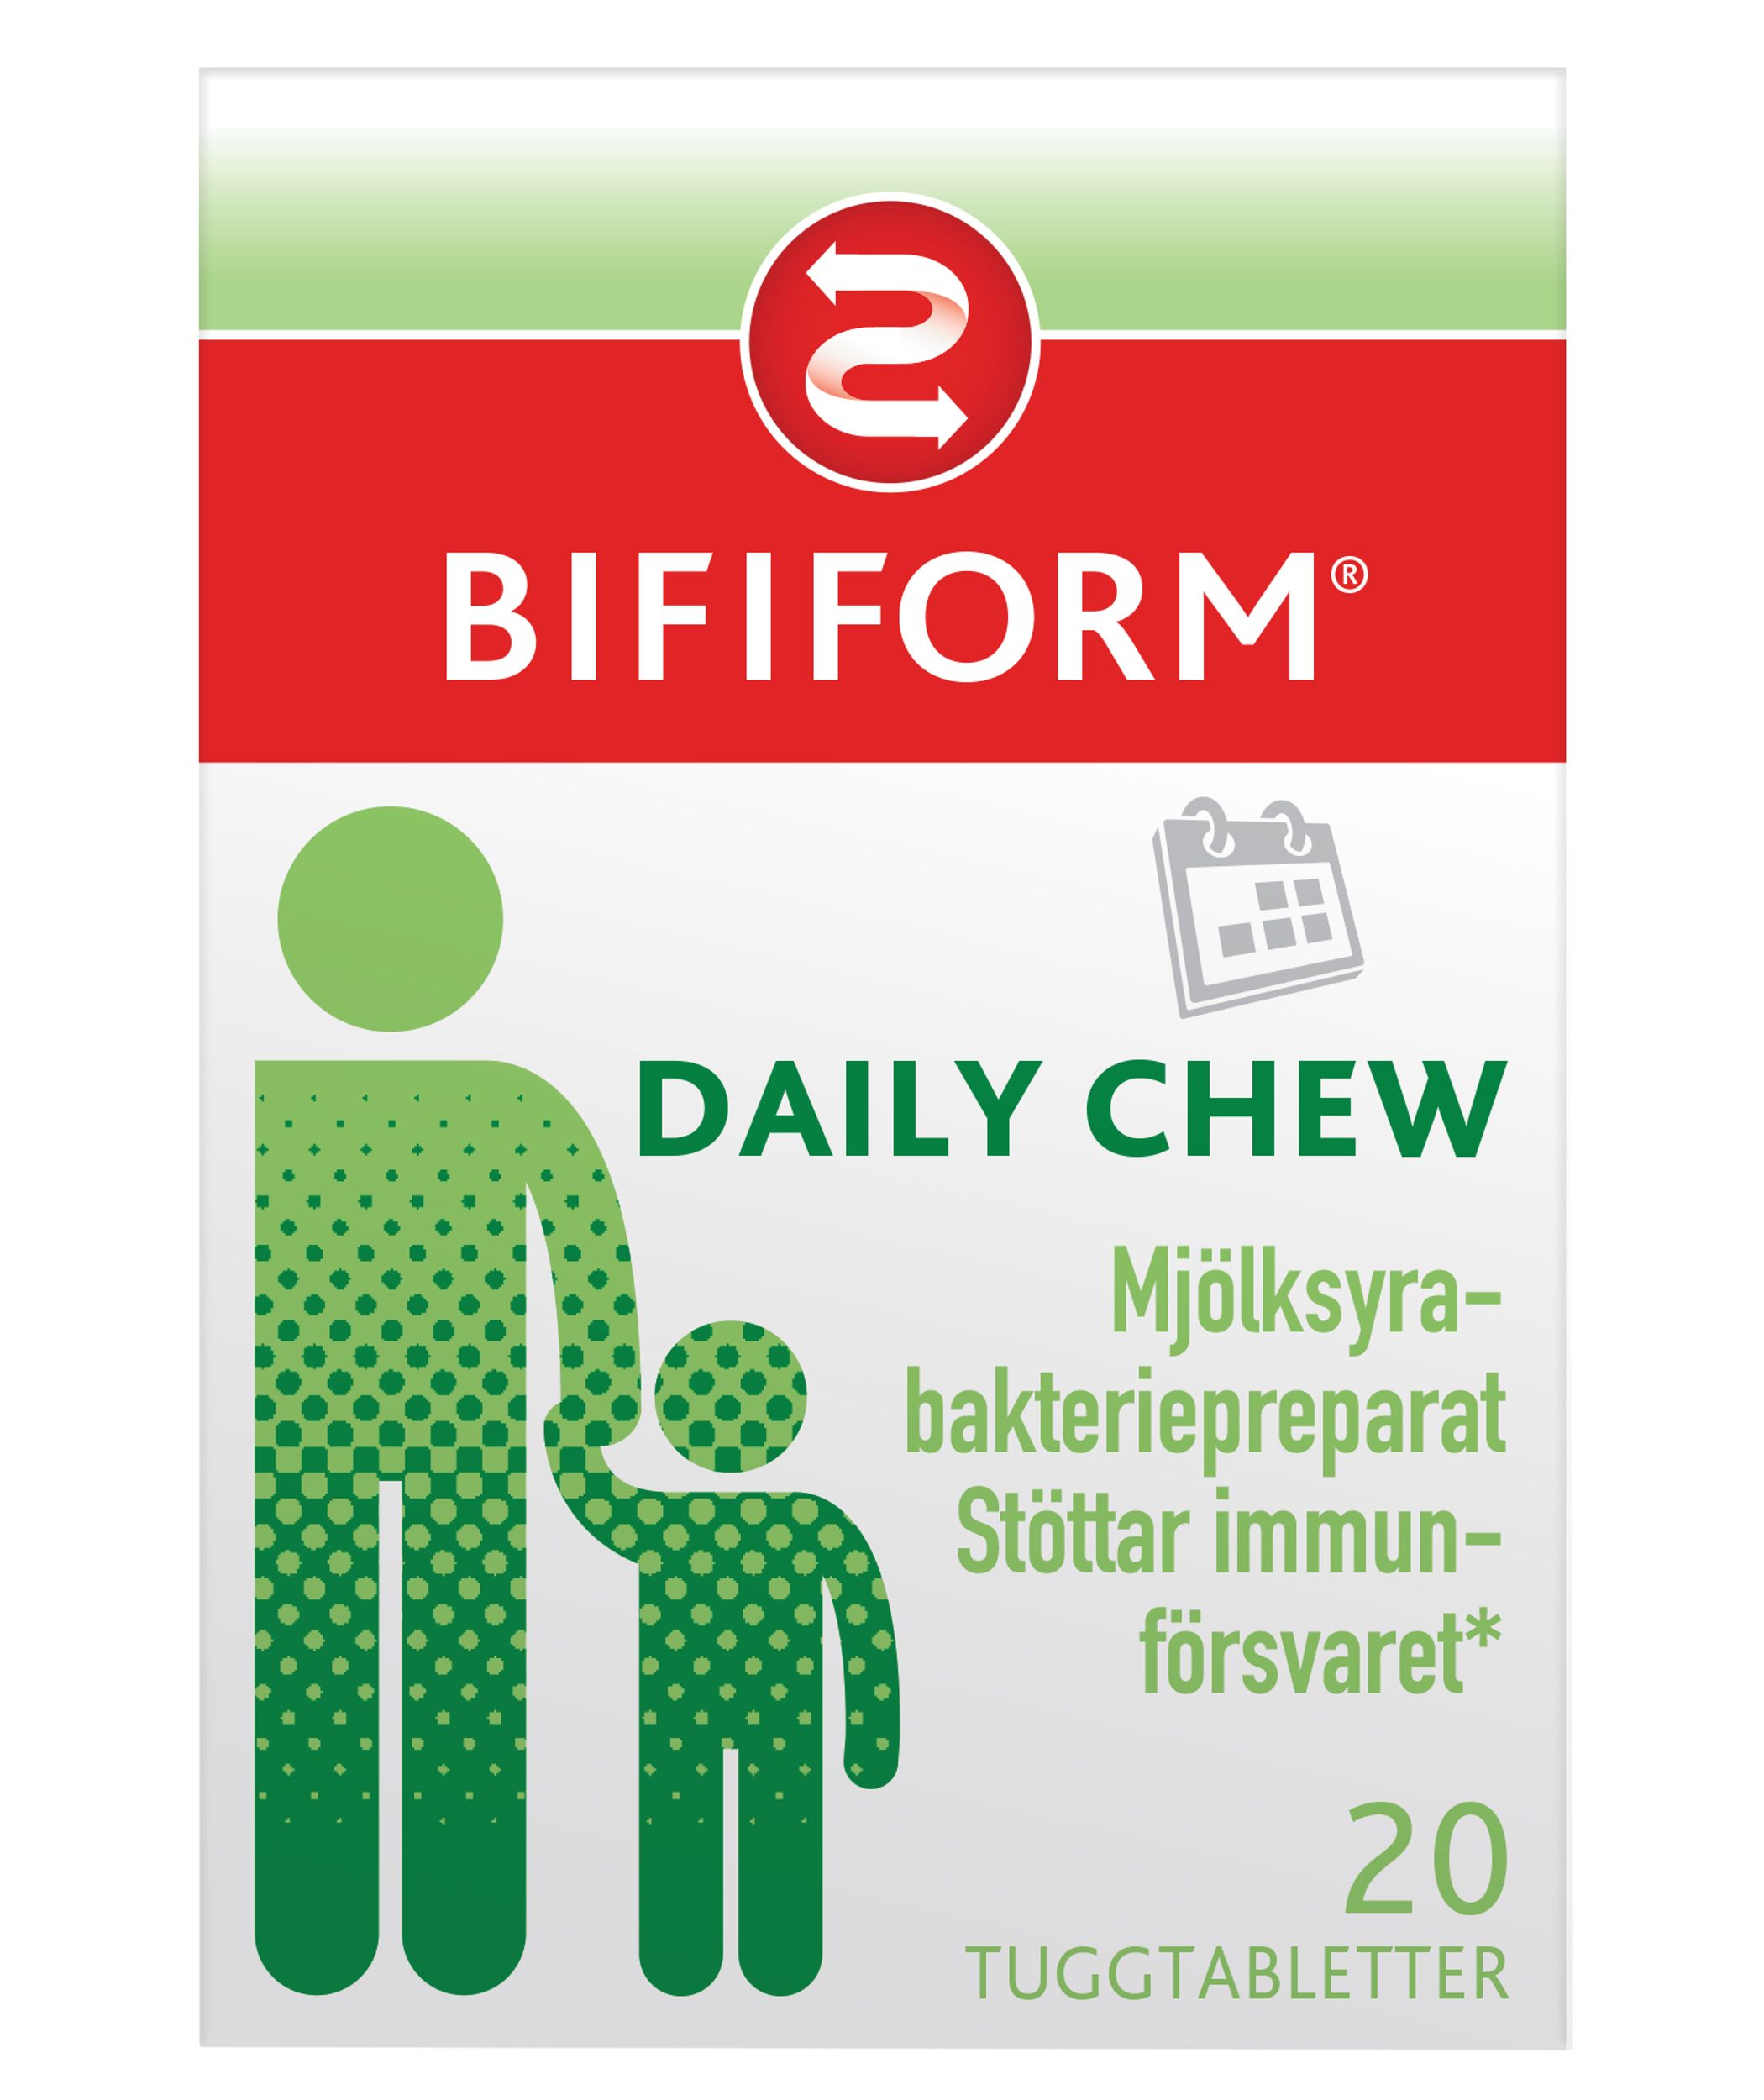 Bifiform Daily Chew Kosttillskott Mjölksyrabakterier 20 tuggtabletter